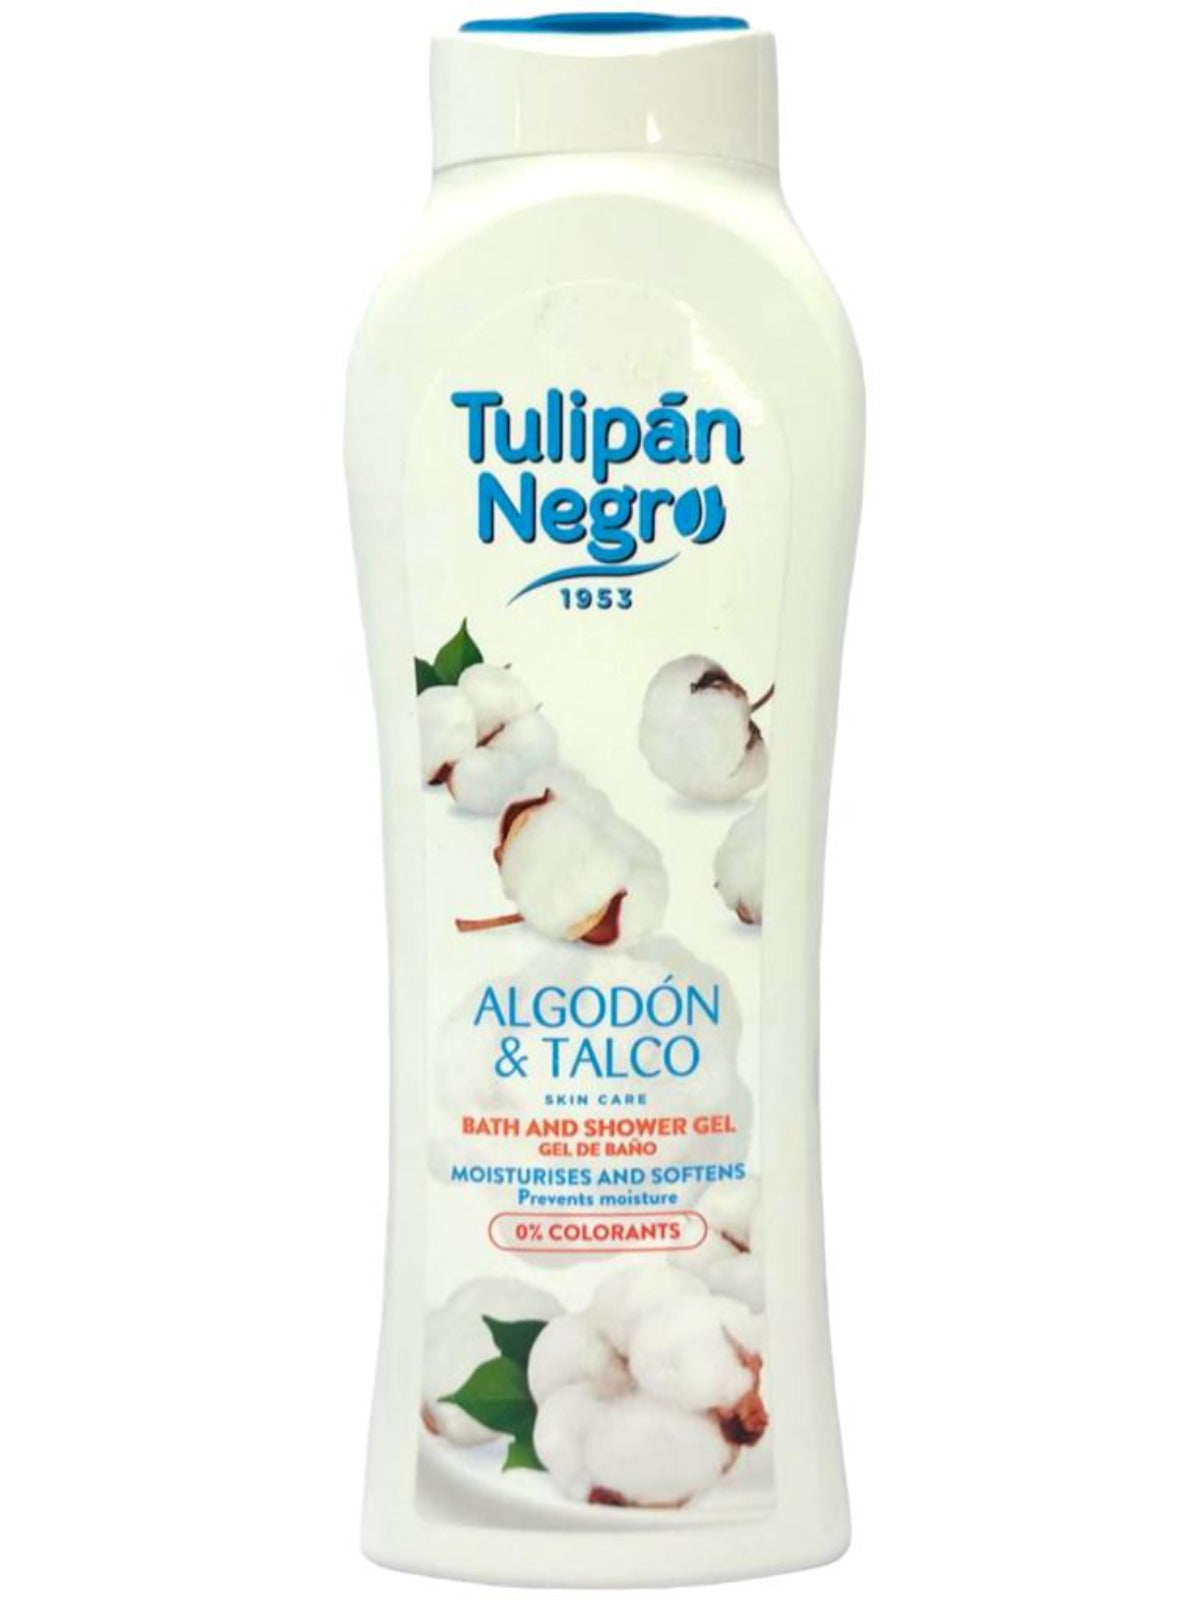 Tulipan Negro Algodon & Talco Spanish Bath And Shower Gel 650ml